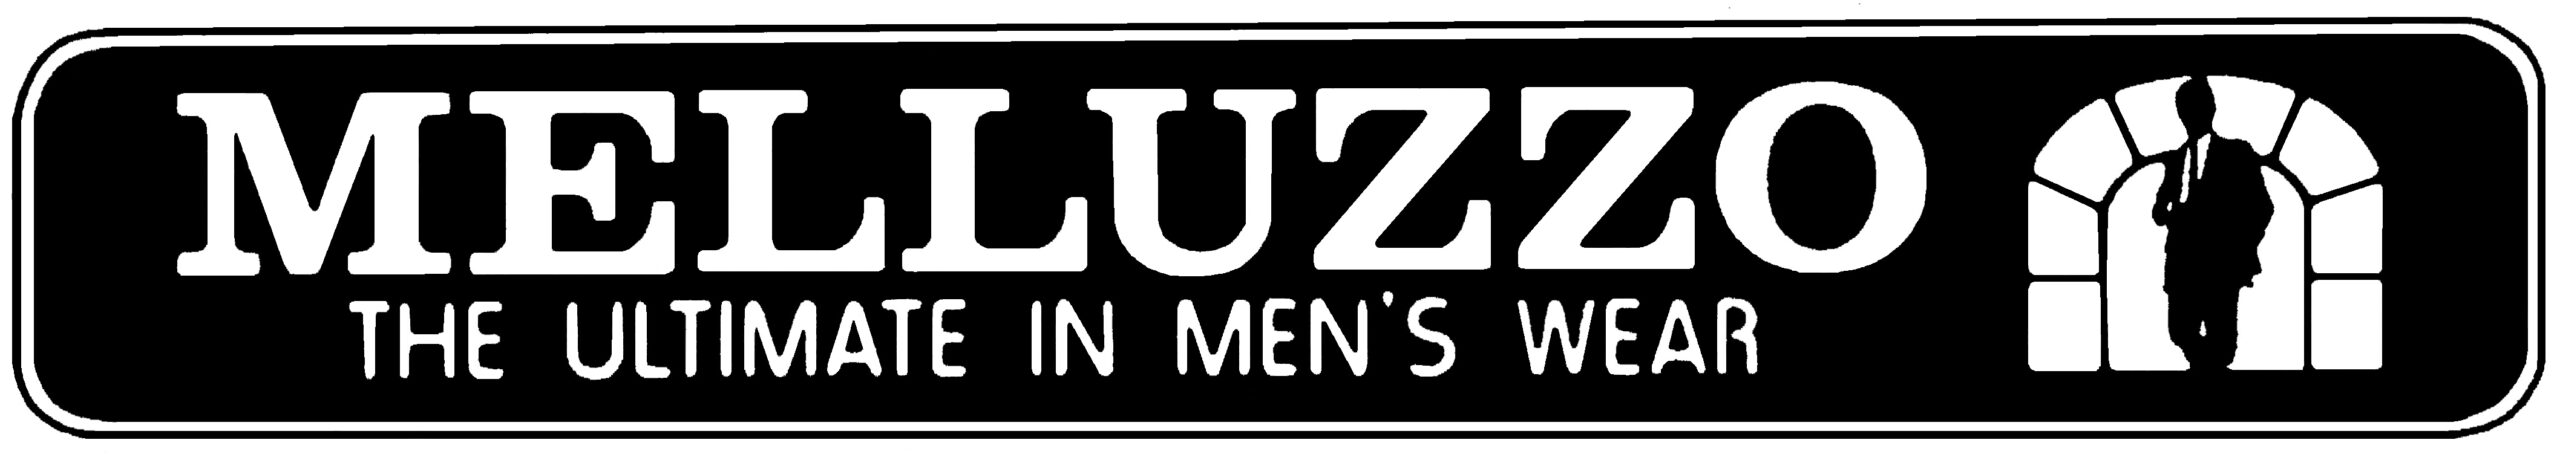 Melluzzo Men's Wear